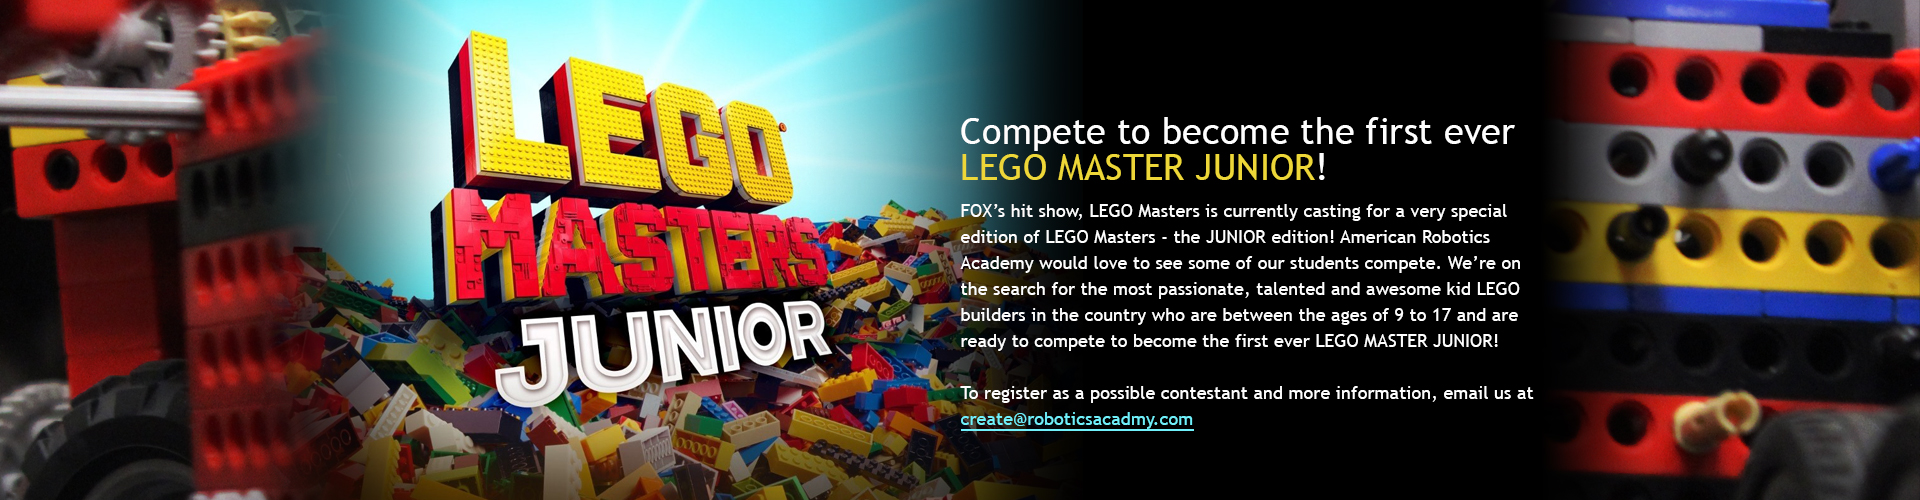 LegoMasters Information